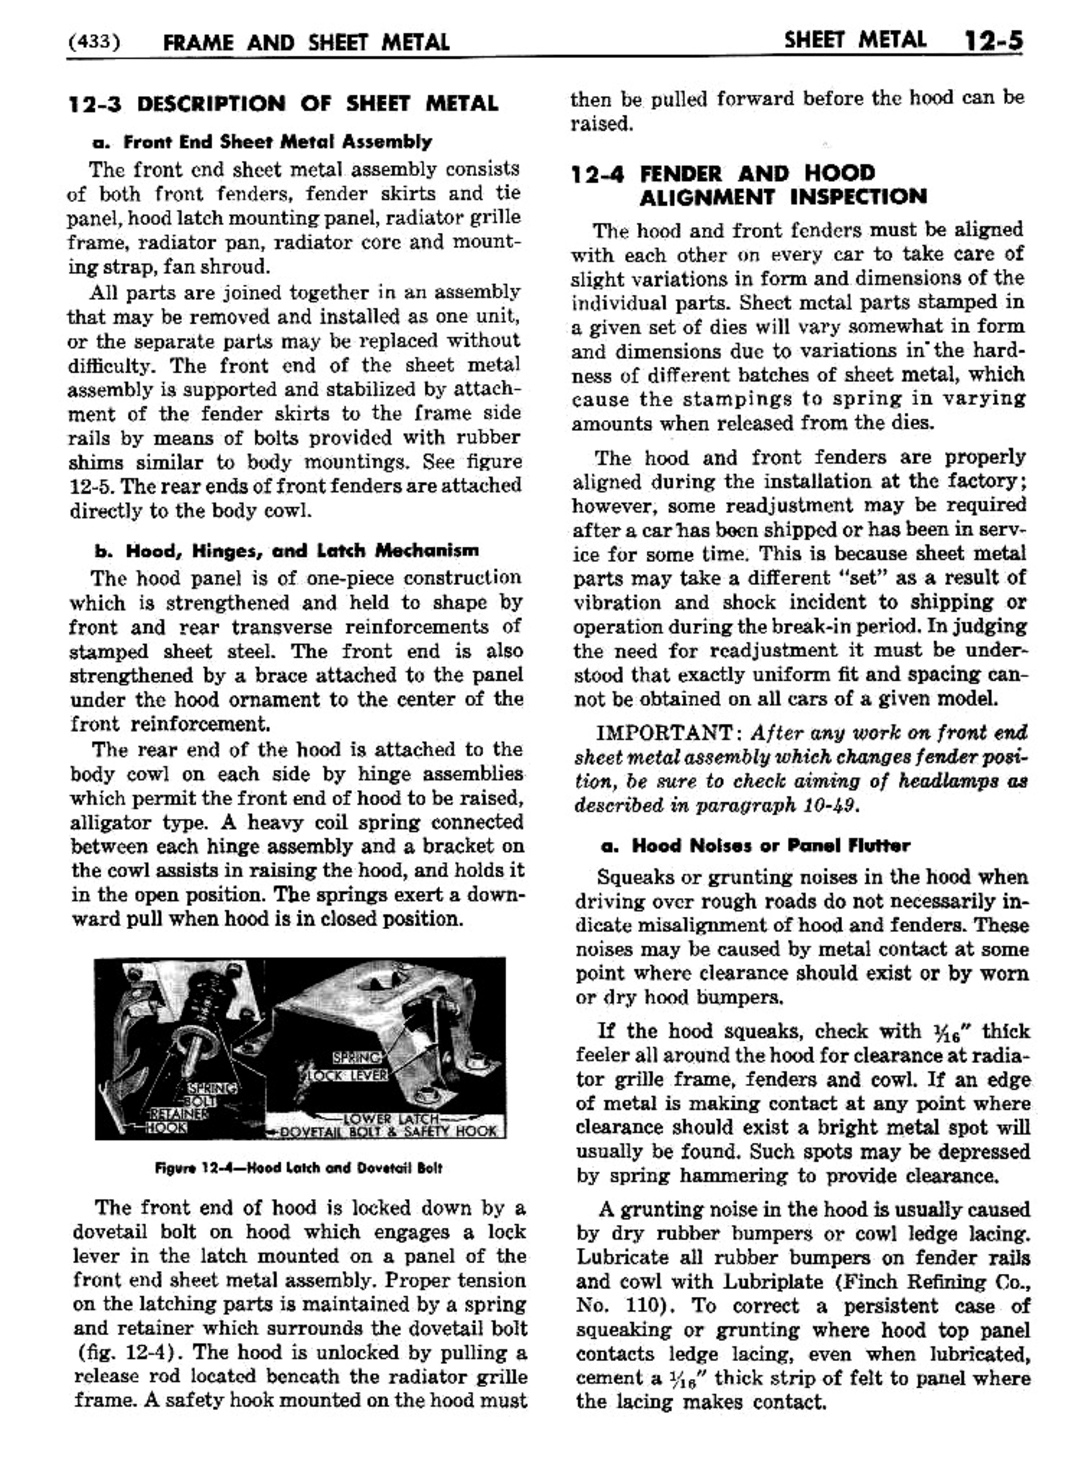 n_13 1954 Buick Shop Manual - Sheet Metal-005-005.jpg